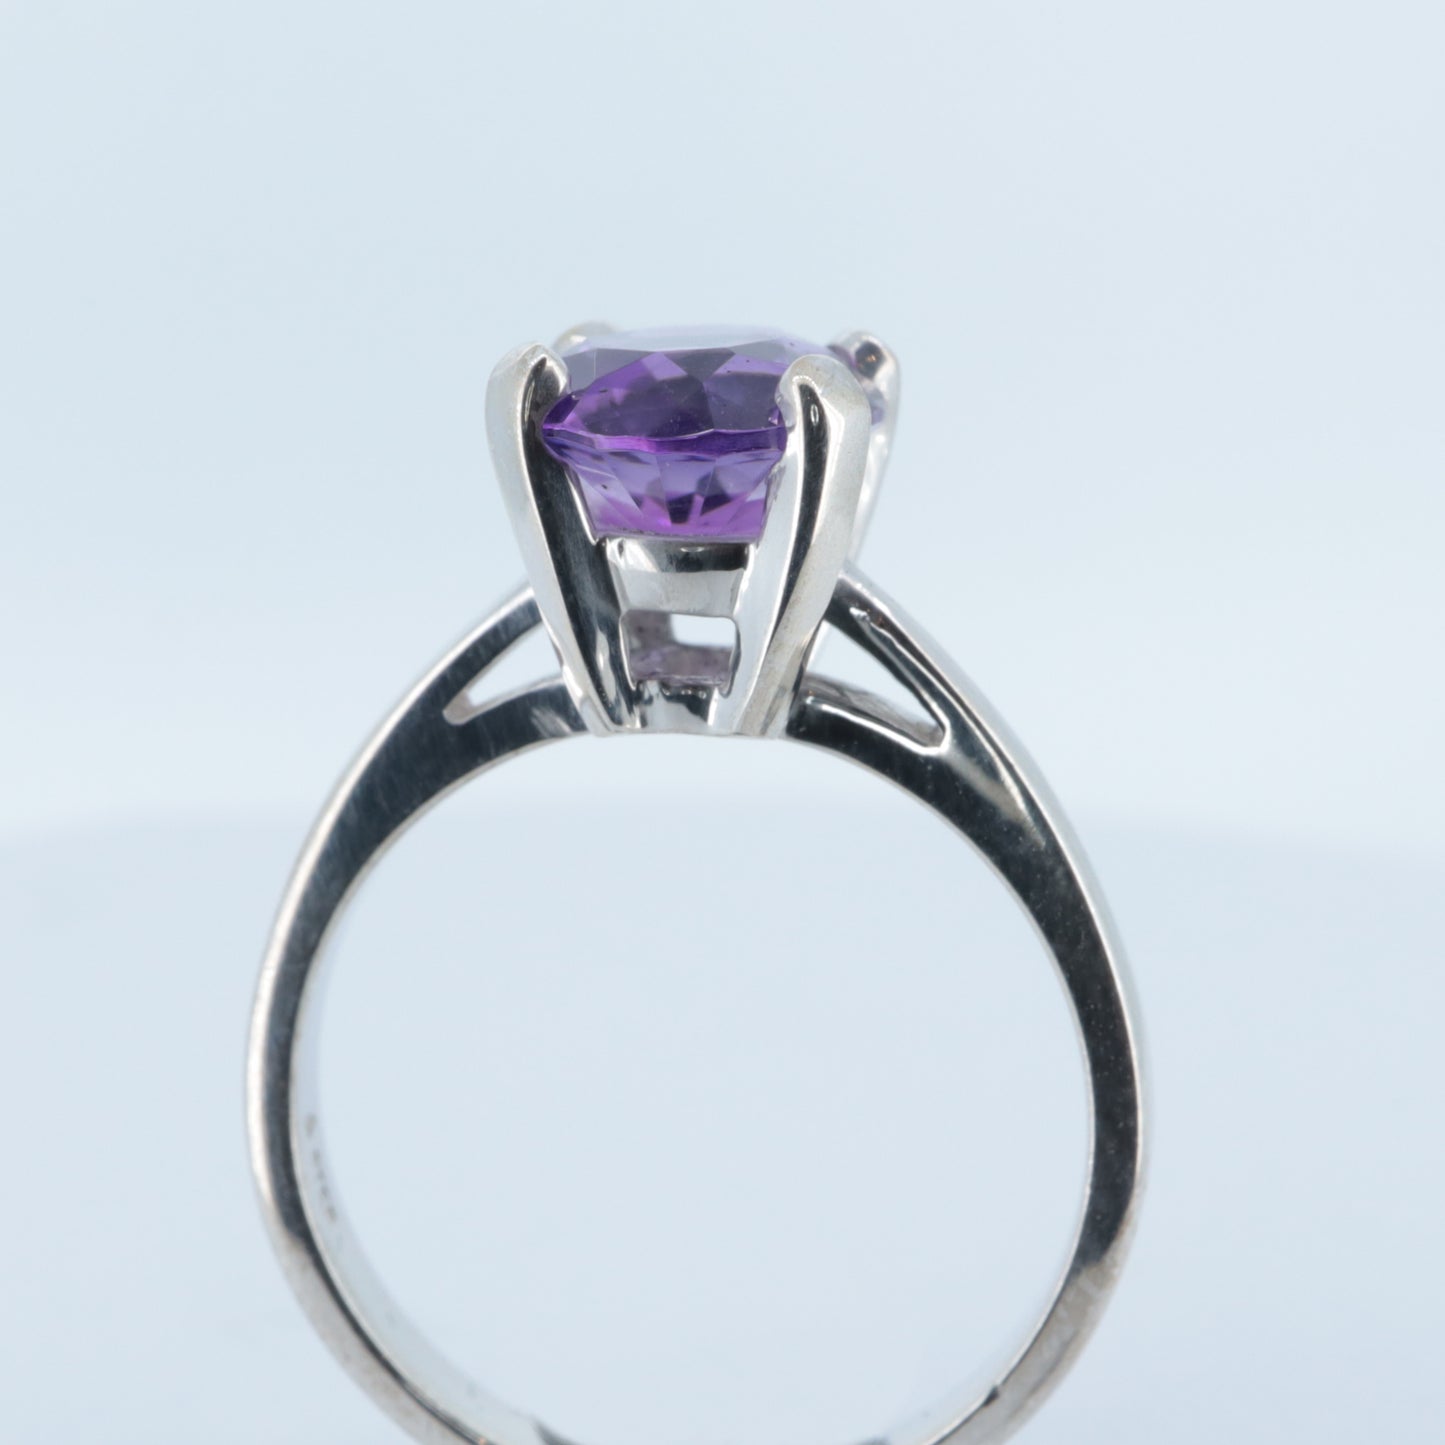 Elegant Amethyst Rose Cut Ring in 925 Sterling Silver - Size 6"